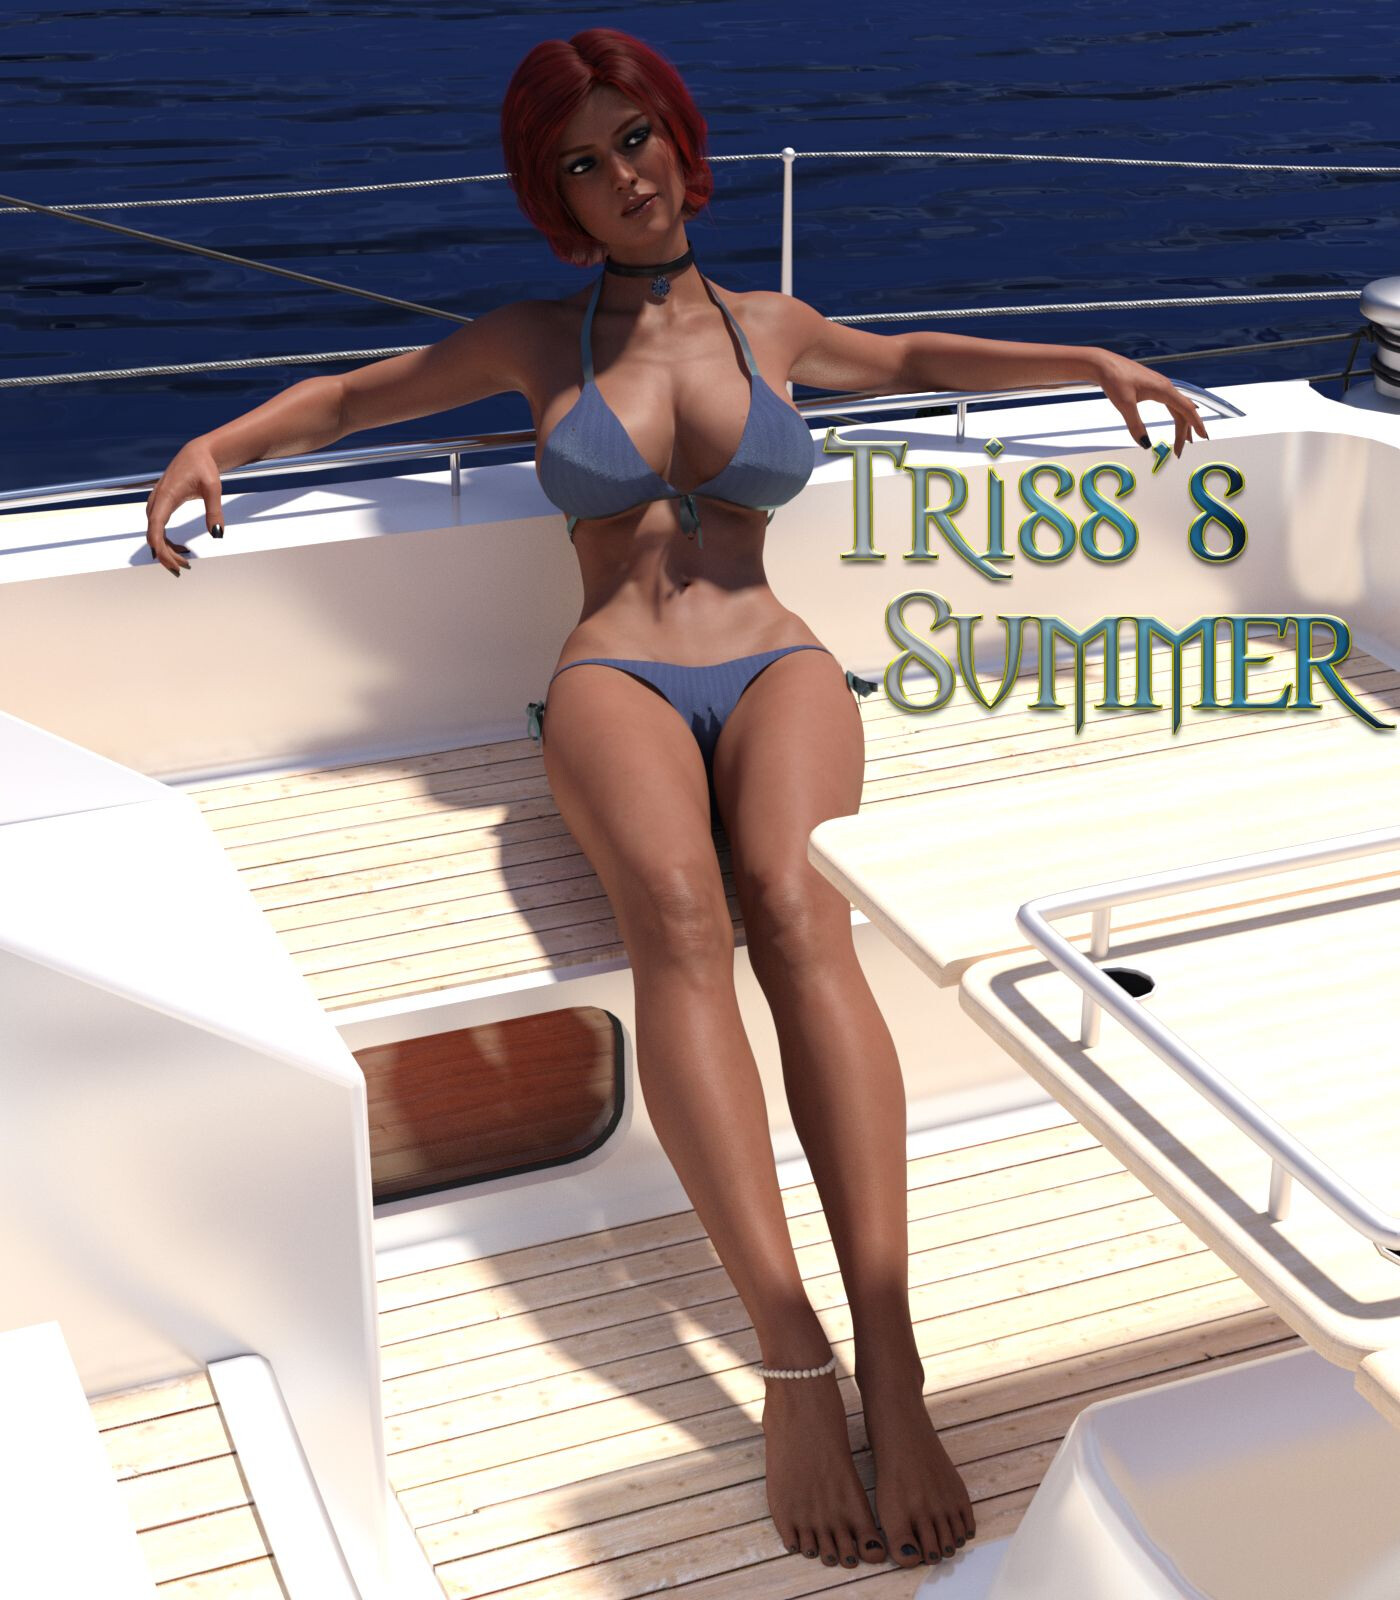 Triss's Summer Main Image